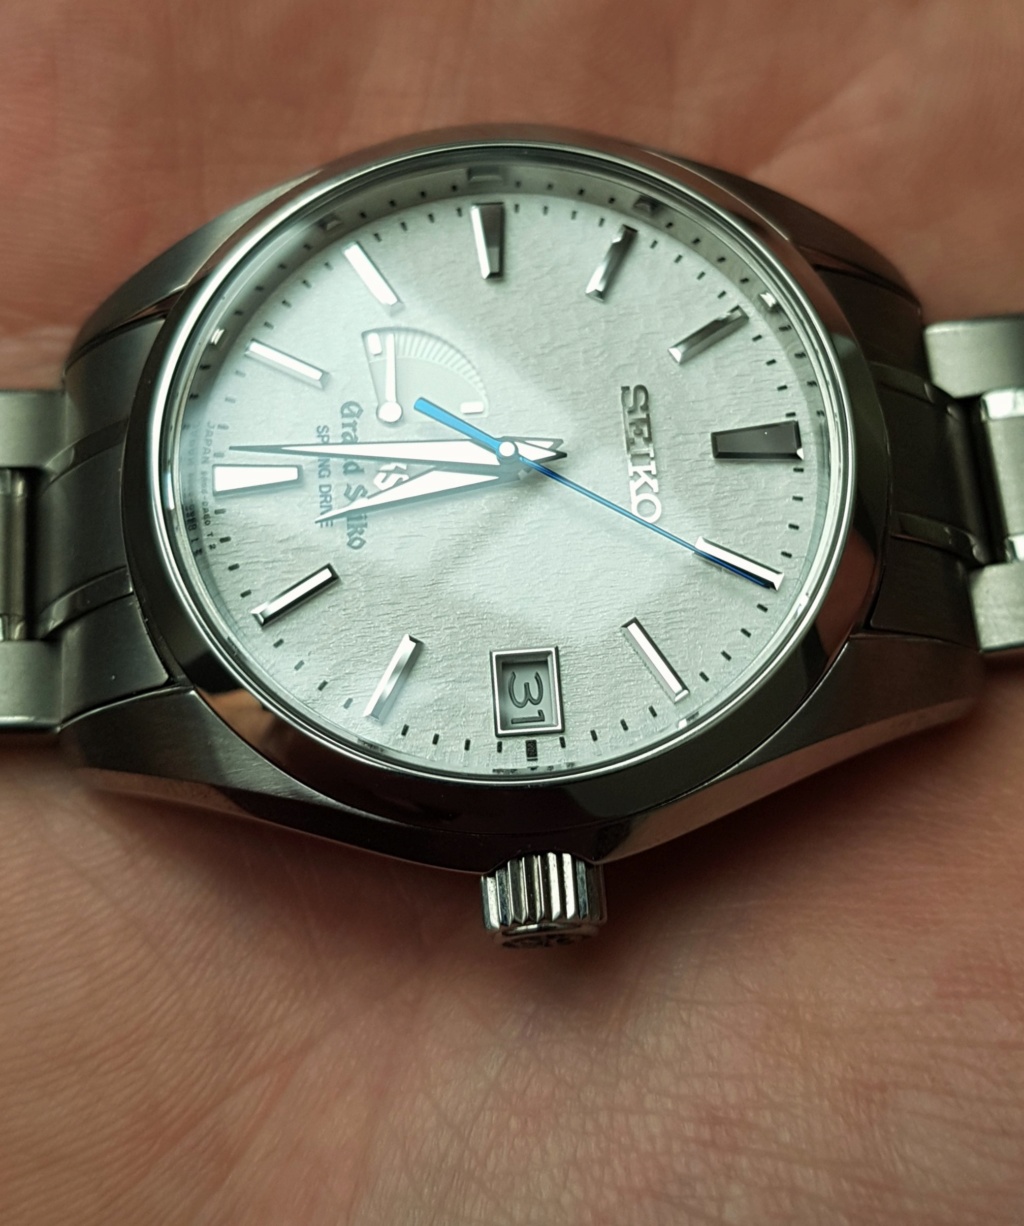 Comparaison de deux montres polyvalentes Grand Seiko SBGA011 vs BB58 47454910